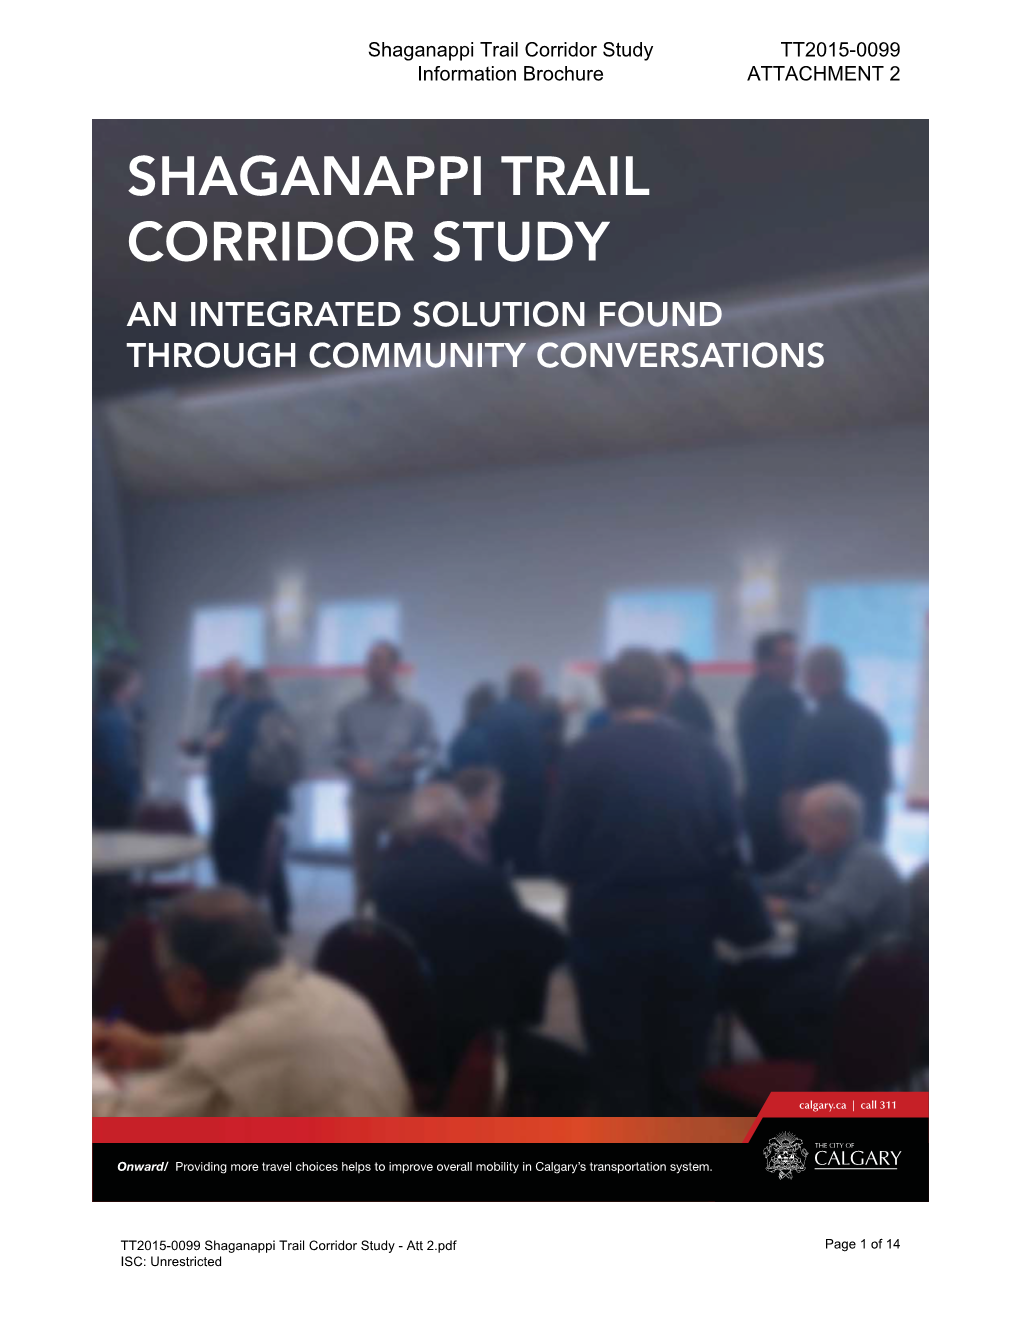 Shaganappi Trail Corridor Study TT2015-0099 Information Brochure ATTACHMENT 2